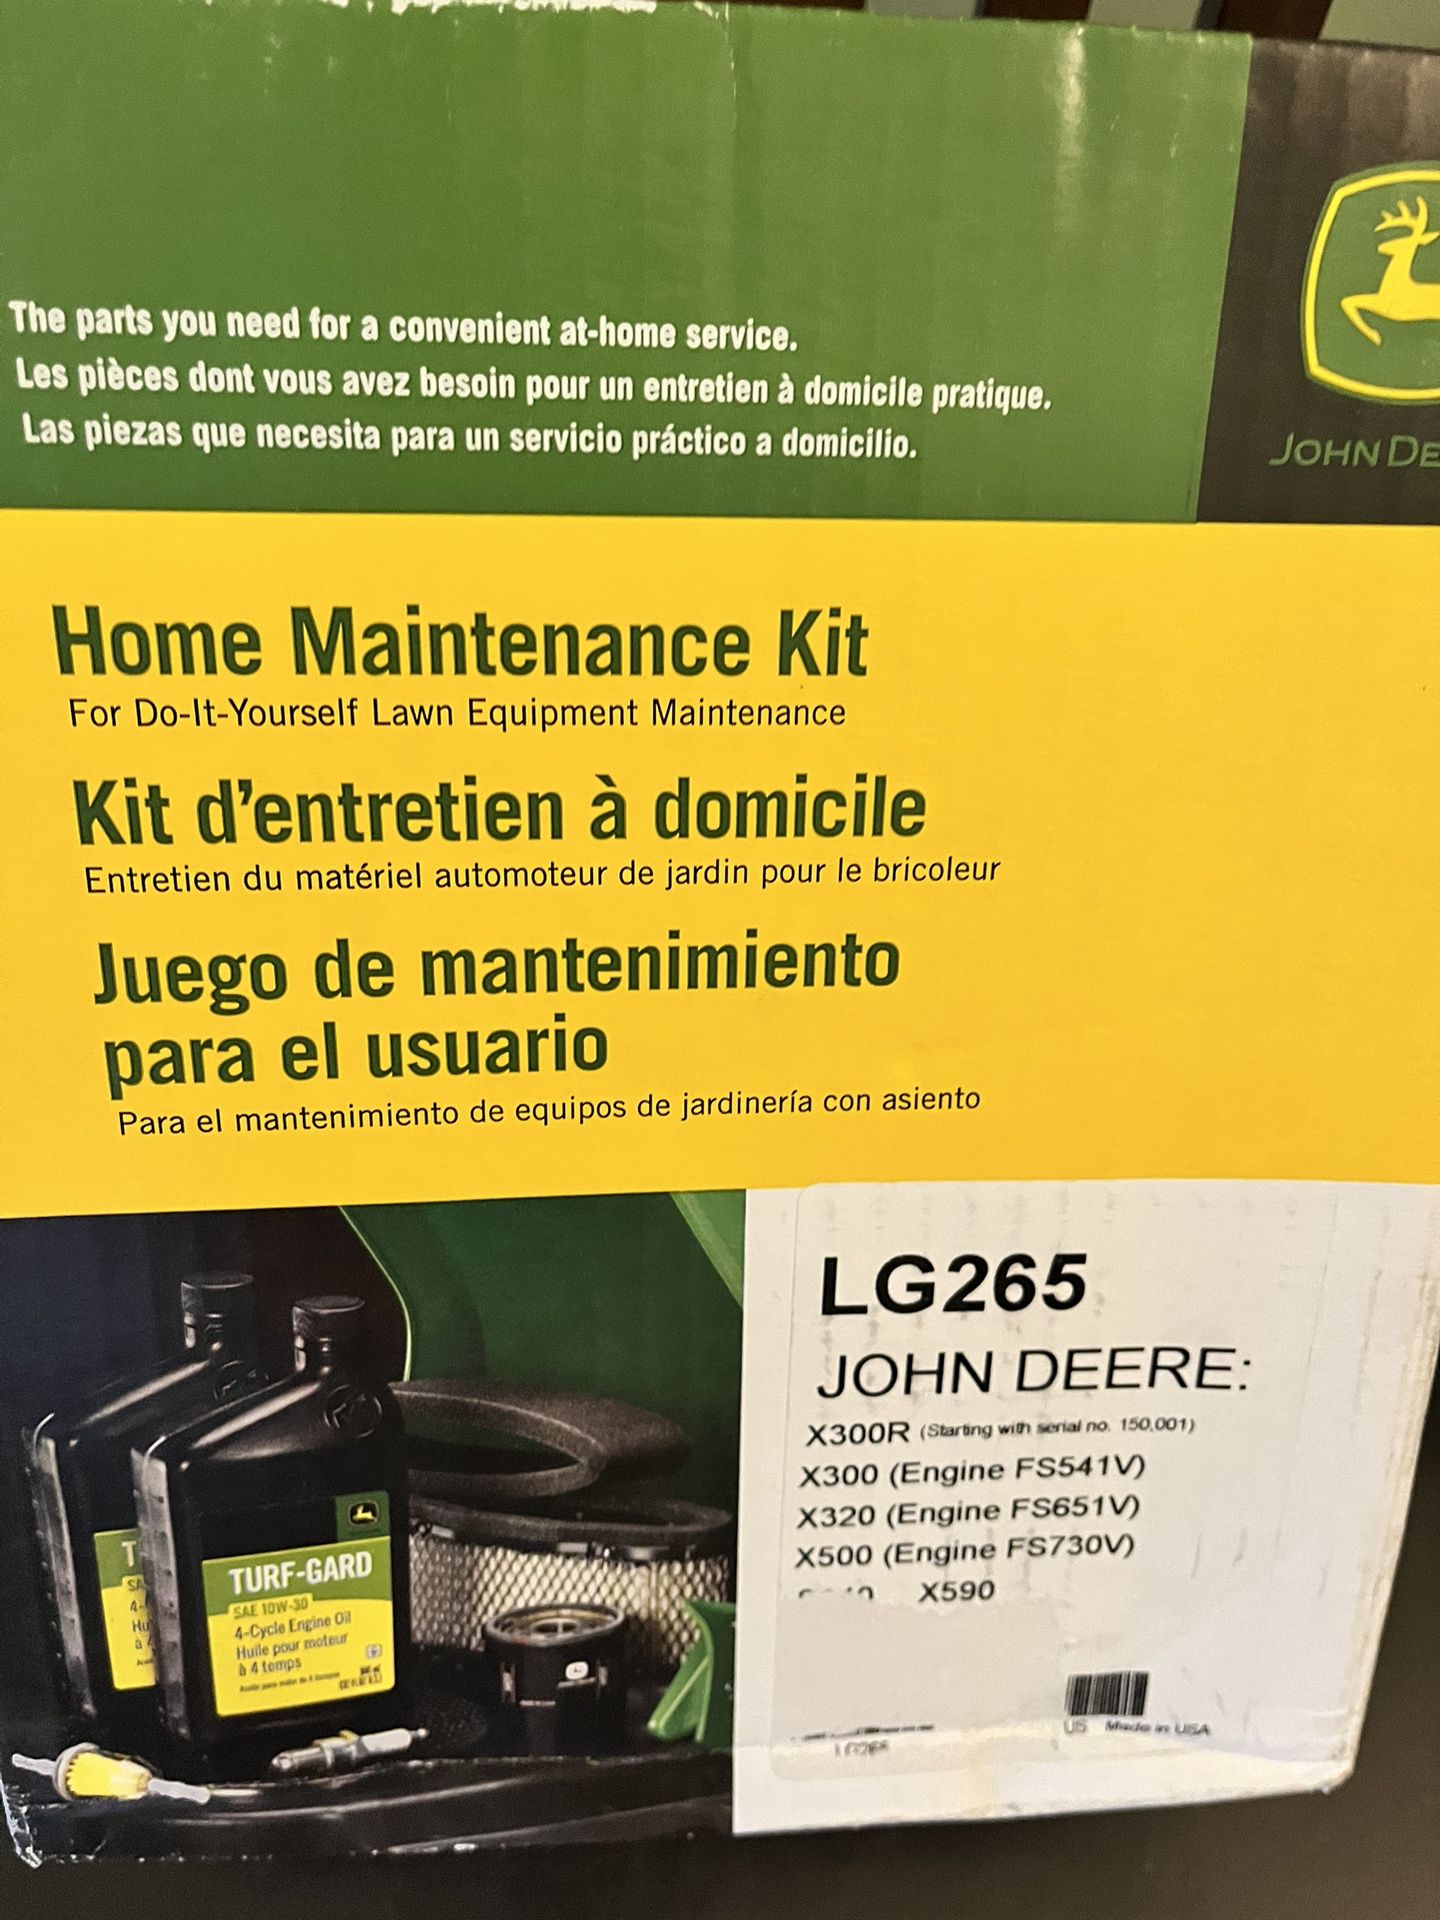 John Deere LG265 Home Maintenance Service Kit S240 X300 X500 X350 X570 Z445 Z665 Mowers Tractors